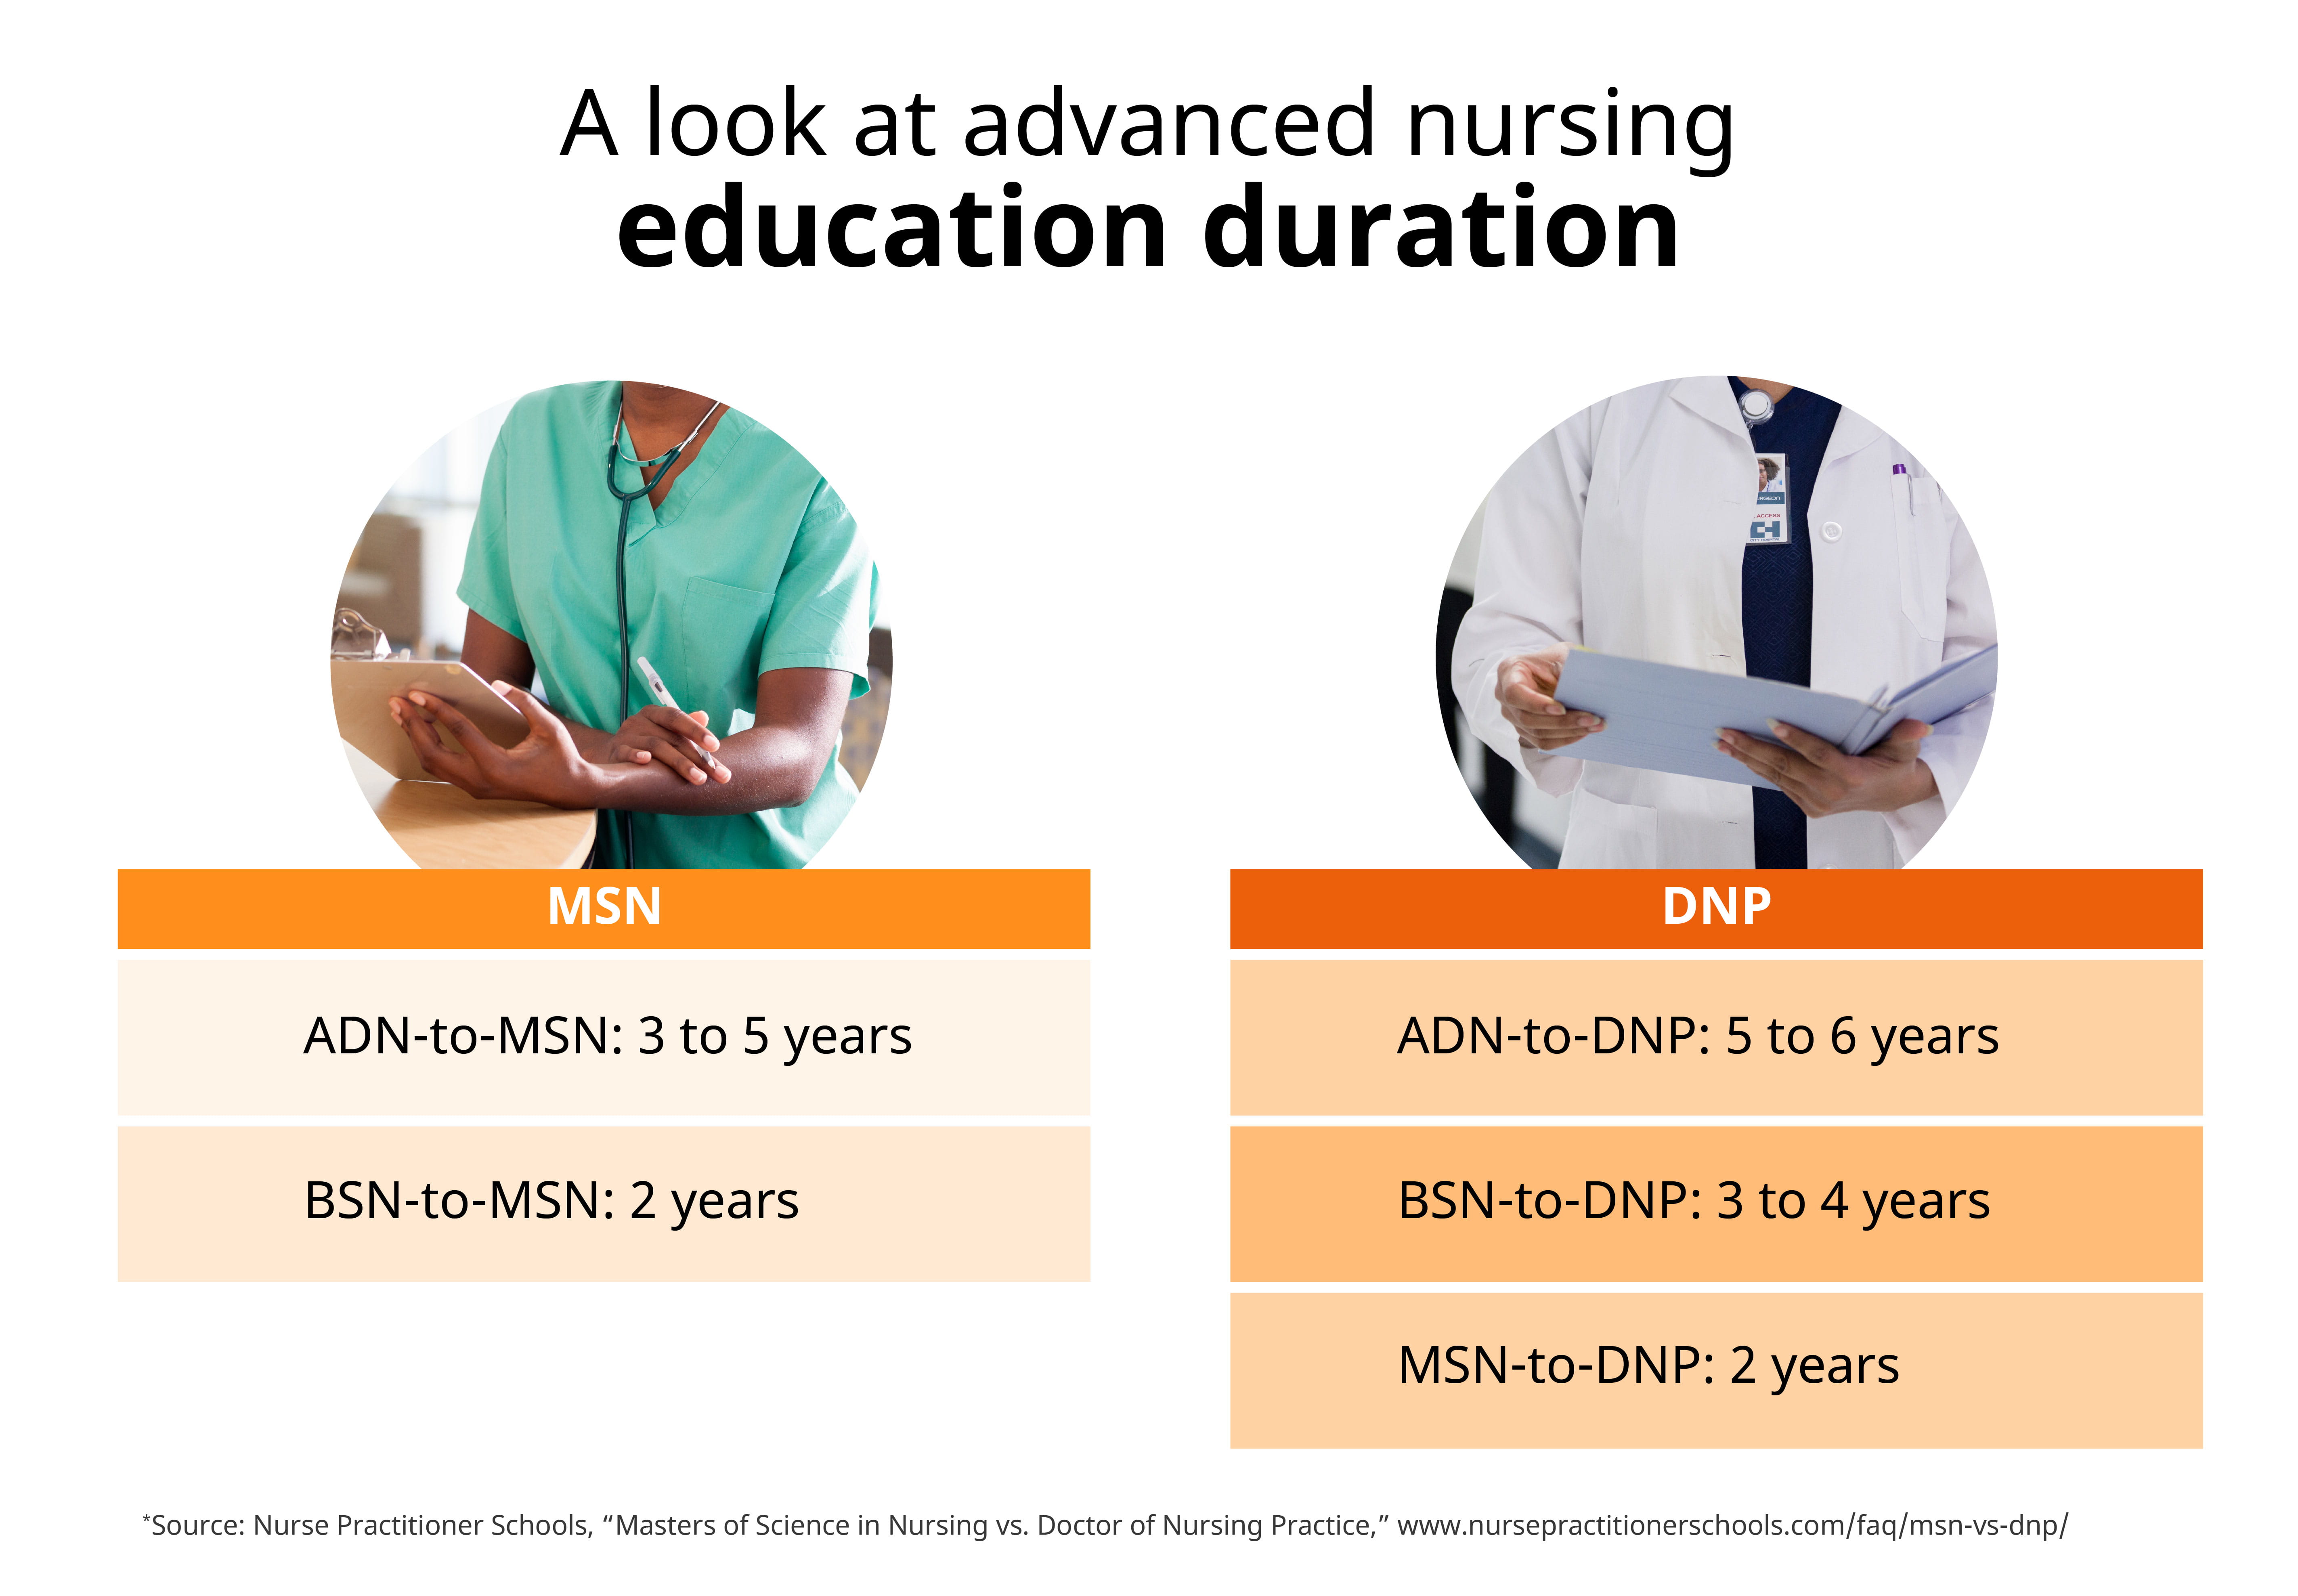 msn to phd nursing education